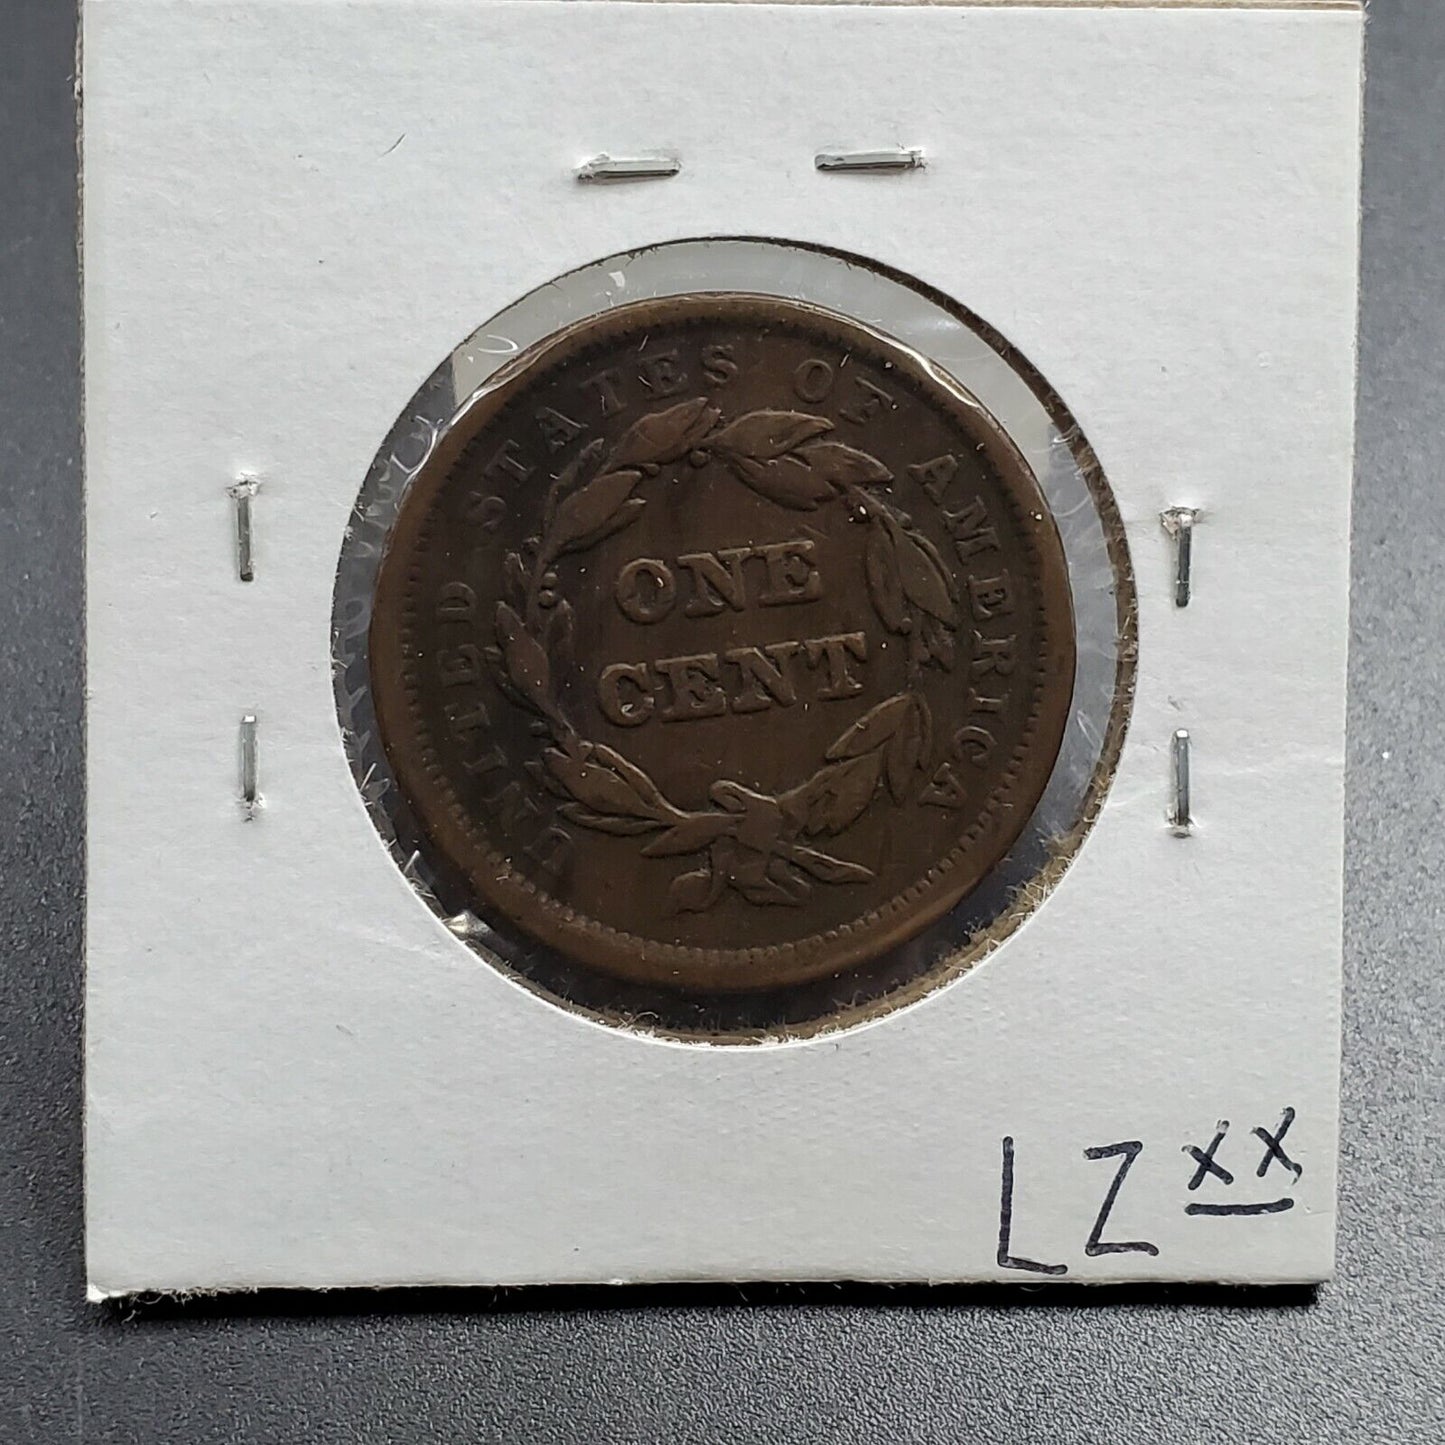 1841 Braided Classic Liberty Head US Large Cent 1c Choice VF Very Fine Circ